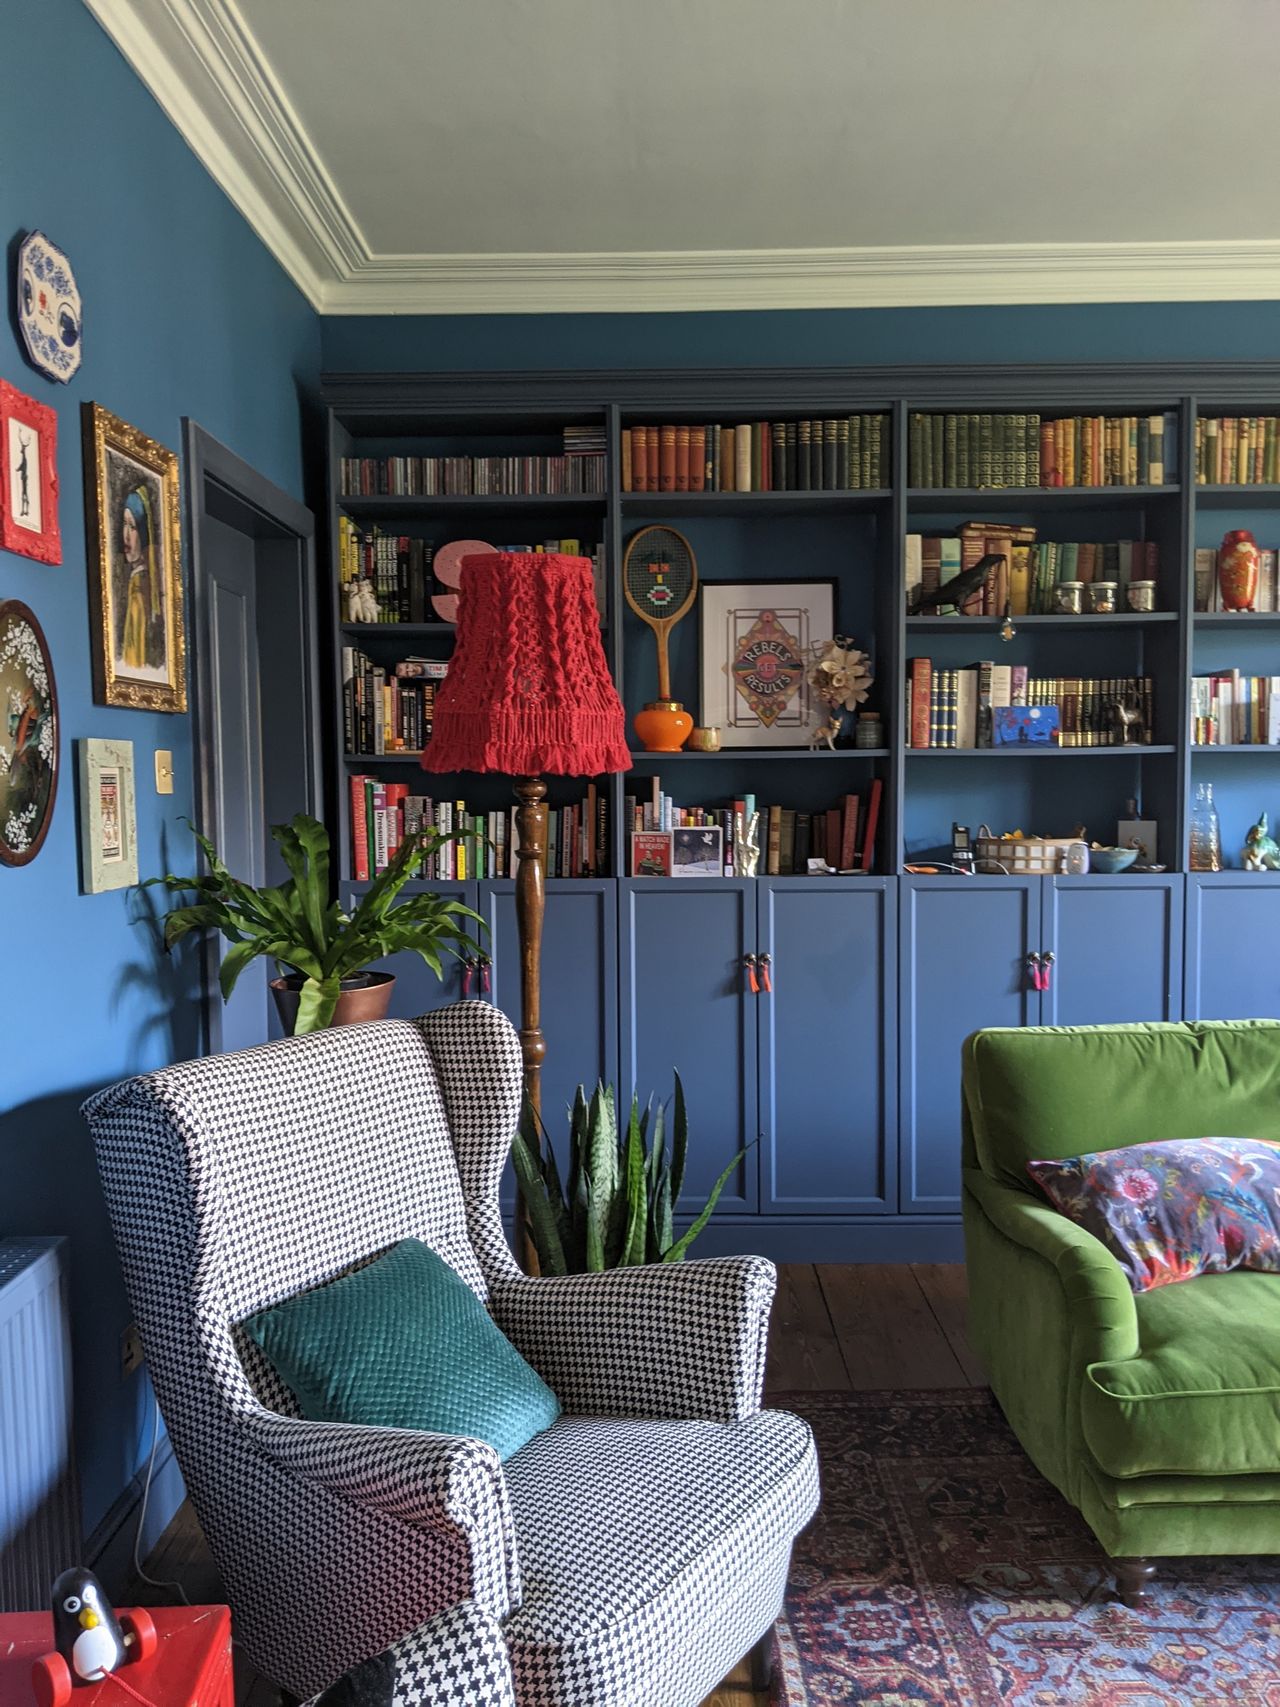 IKEA BILLY Bookcase Hacks — 15 DIY Storage Ideas | Livingetc